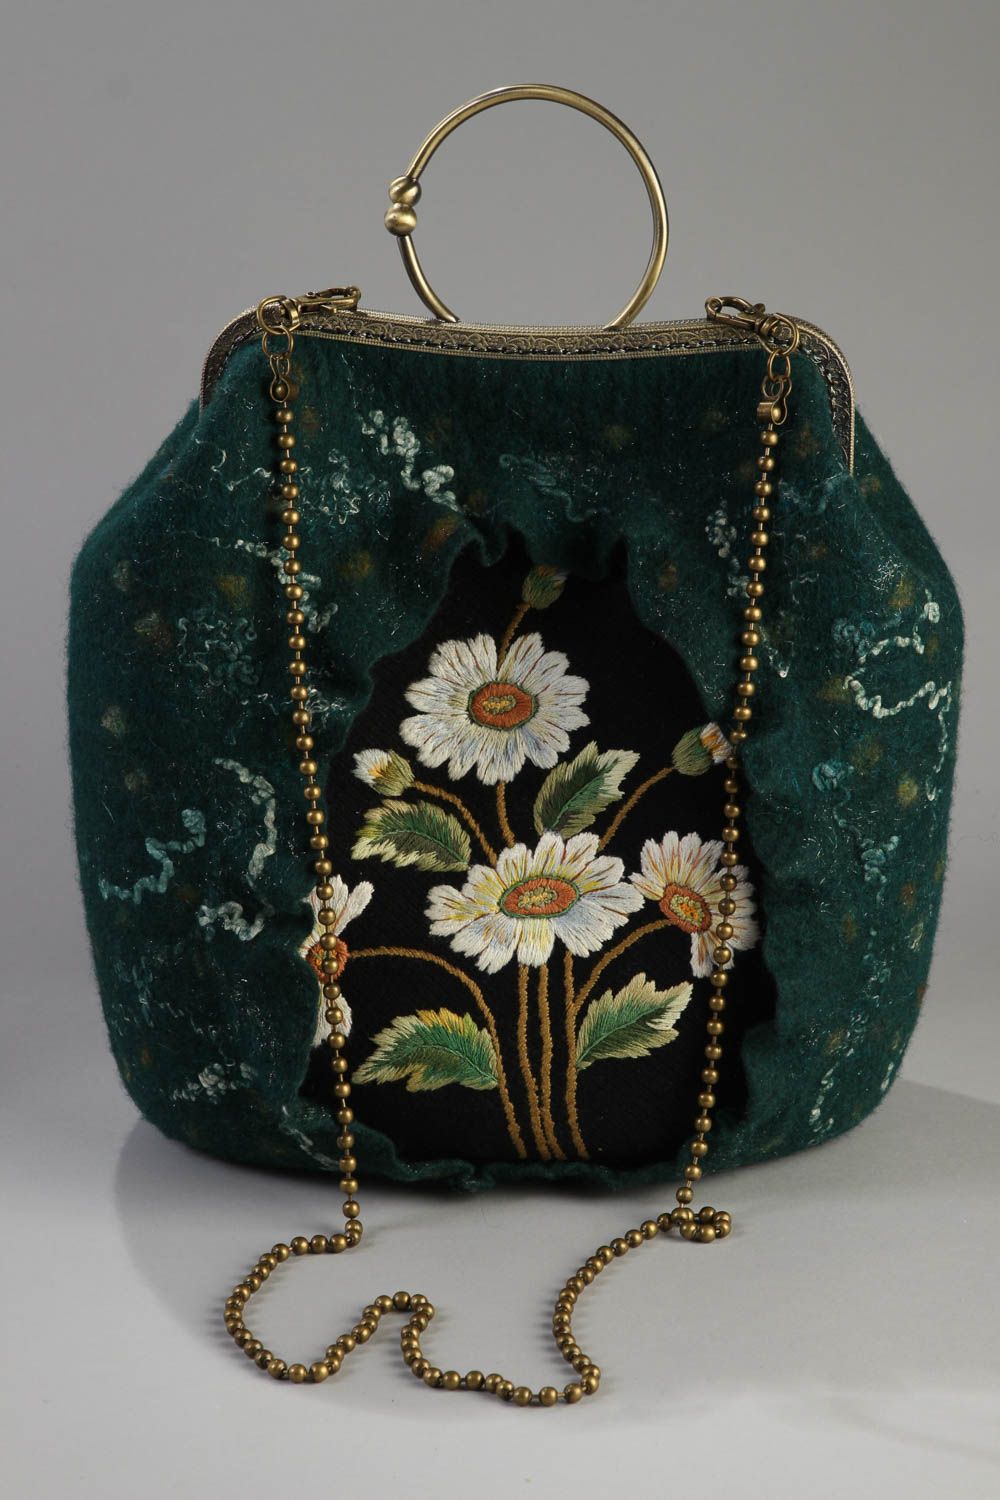 Stylish handmade bag design felted wool bag unusual handbag gifts for her photo 1